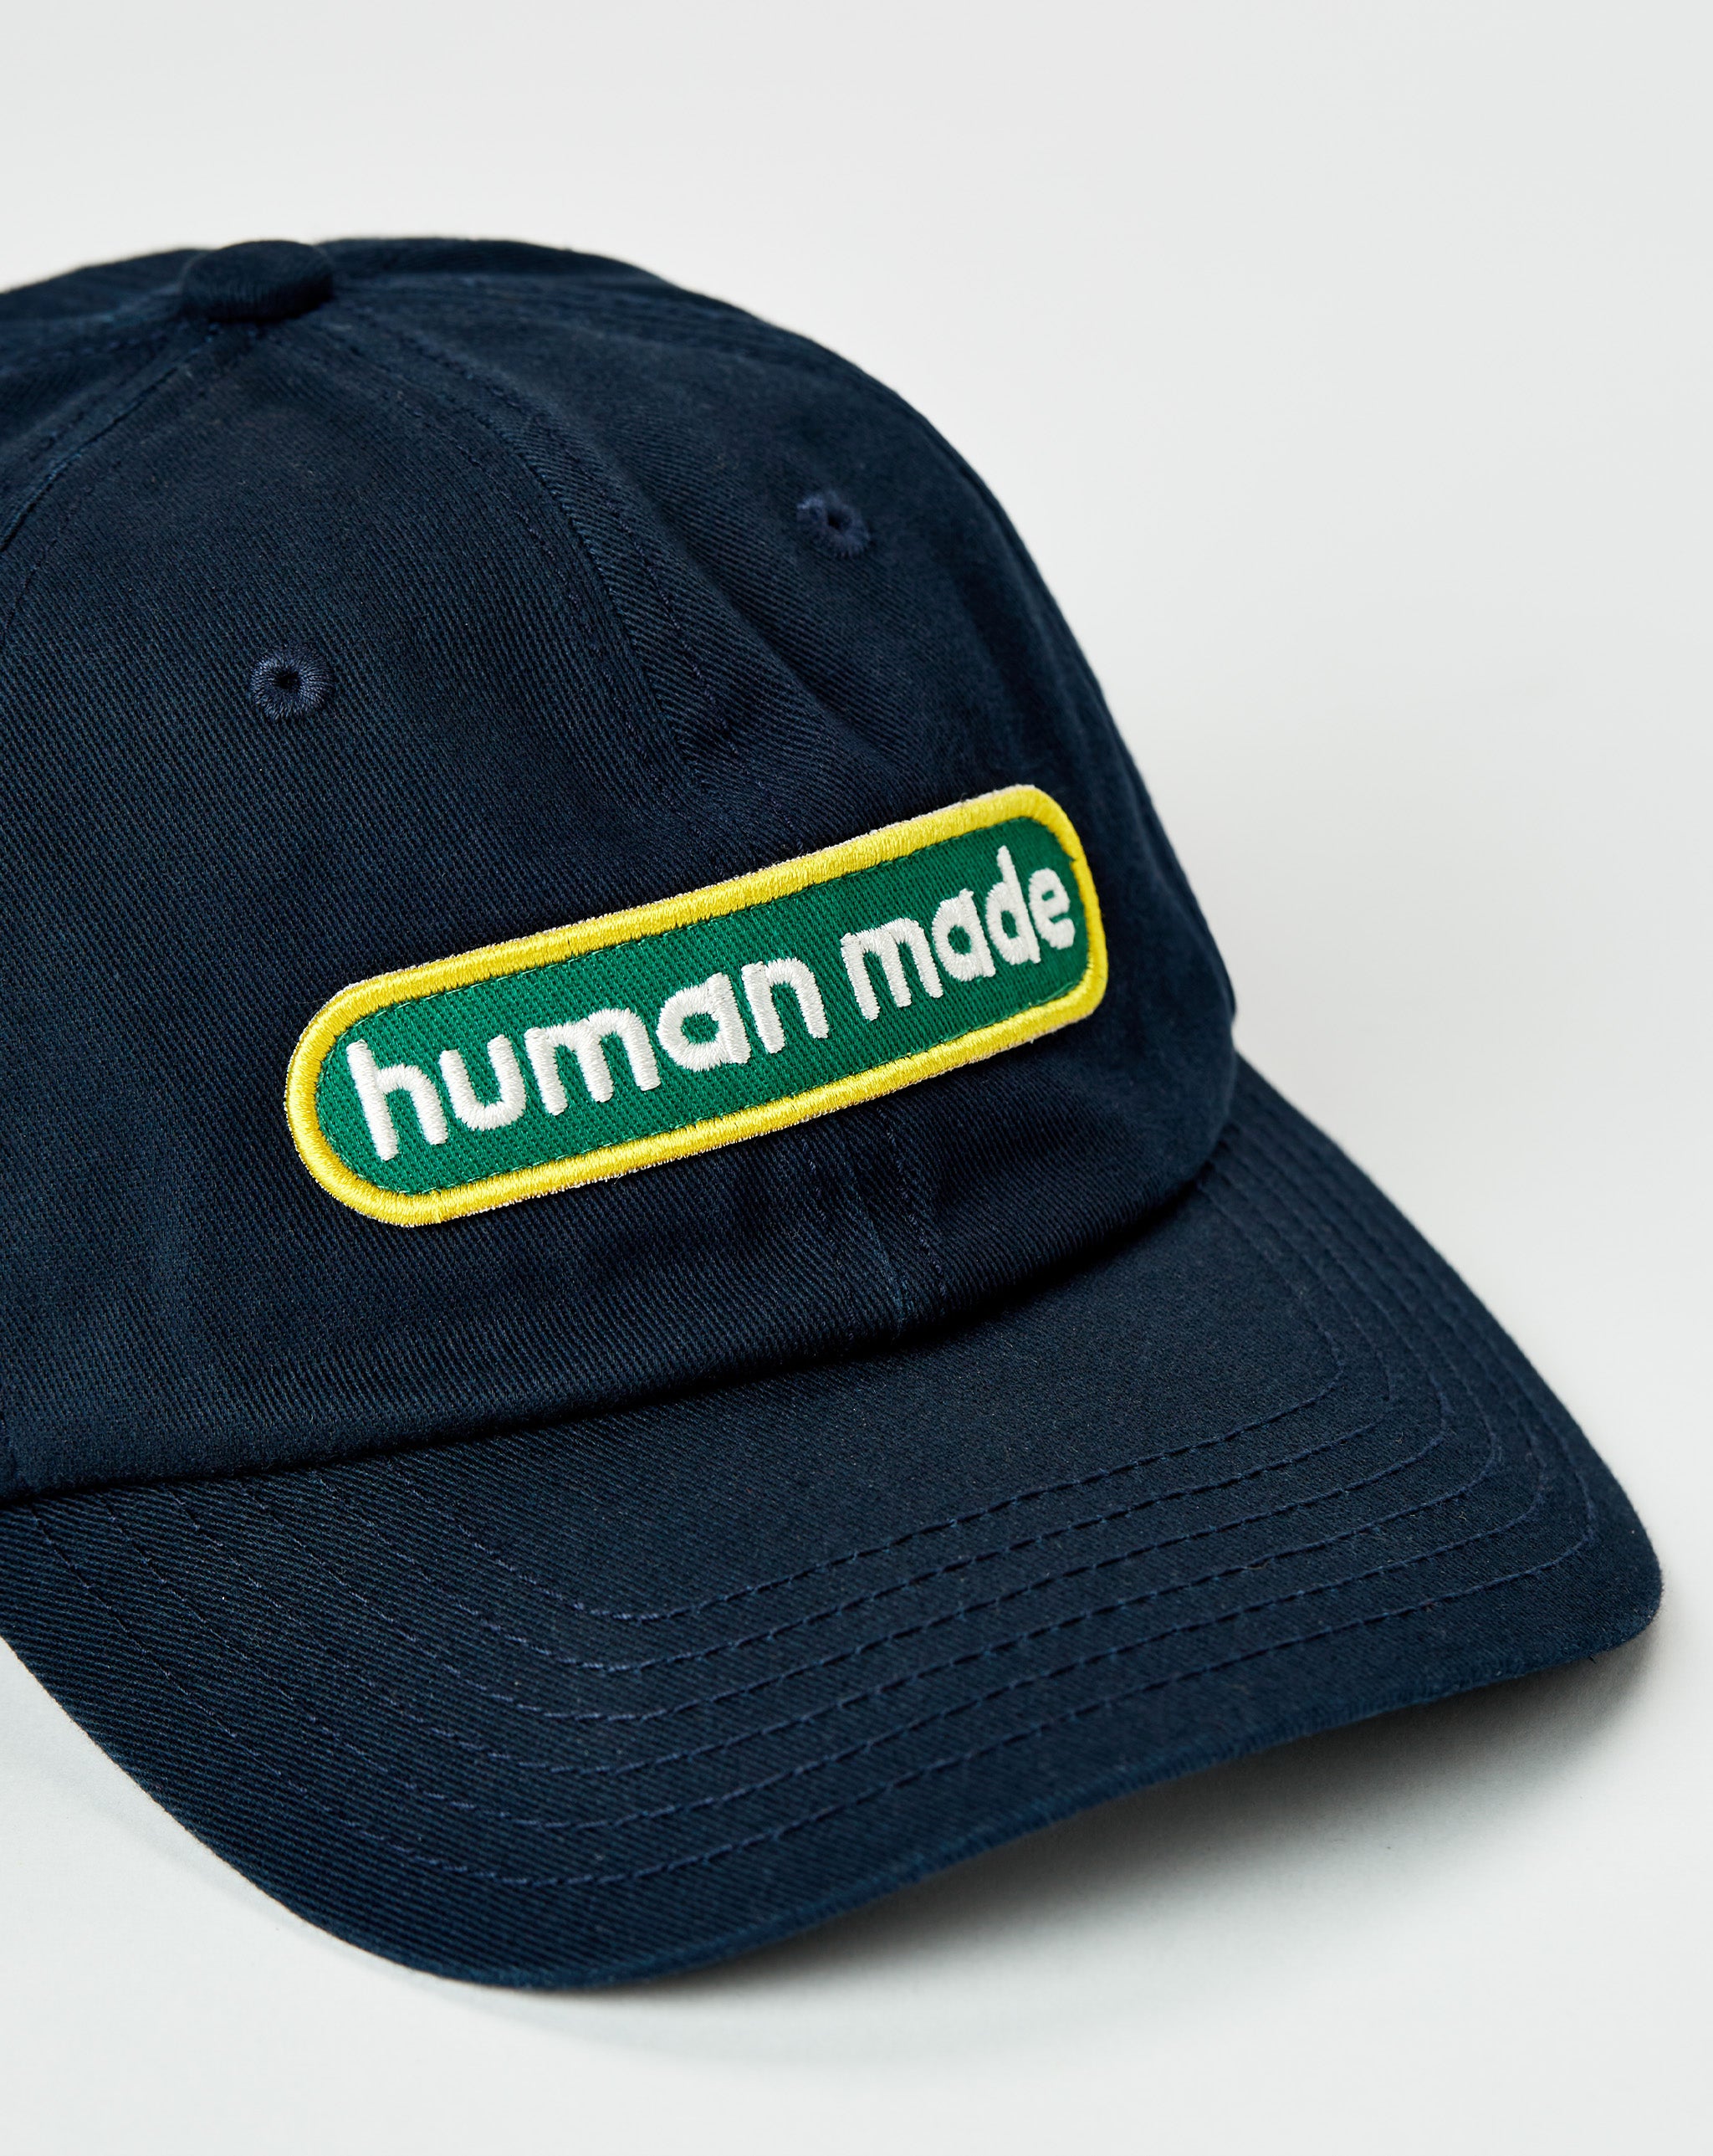 Human Made 6 Warm-Me Damian Stripe beanie hat  - Cheap Erlebniswelt-fliegenfischen Jordan outlet